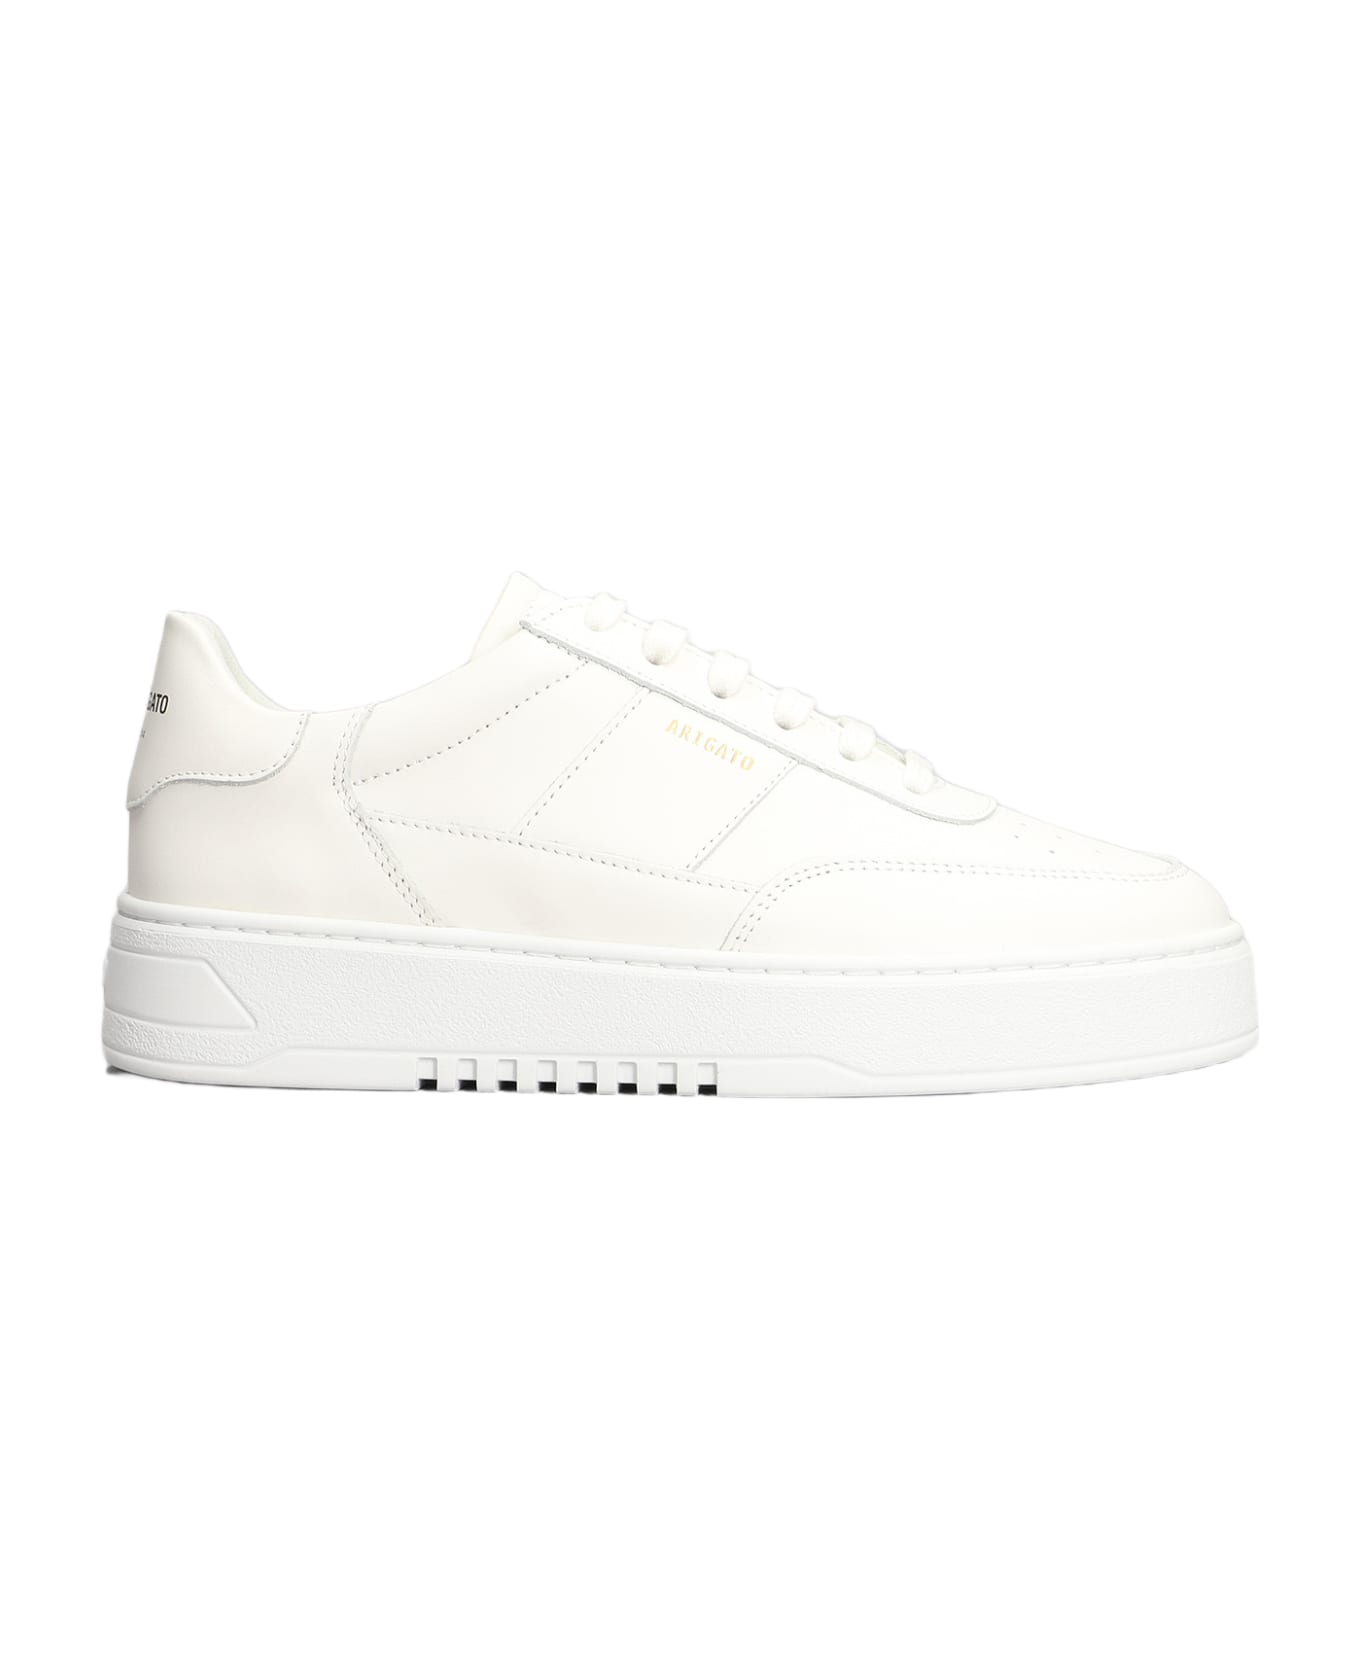 Axel Arigato Orbit Sneakers In White Leather - Bianco